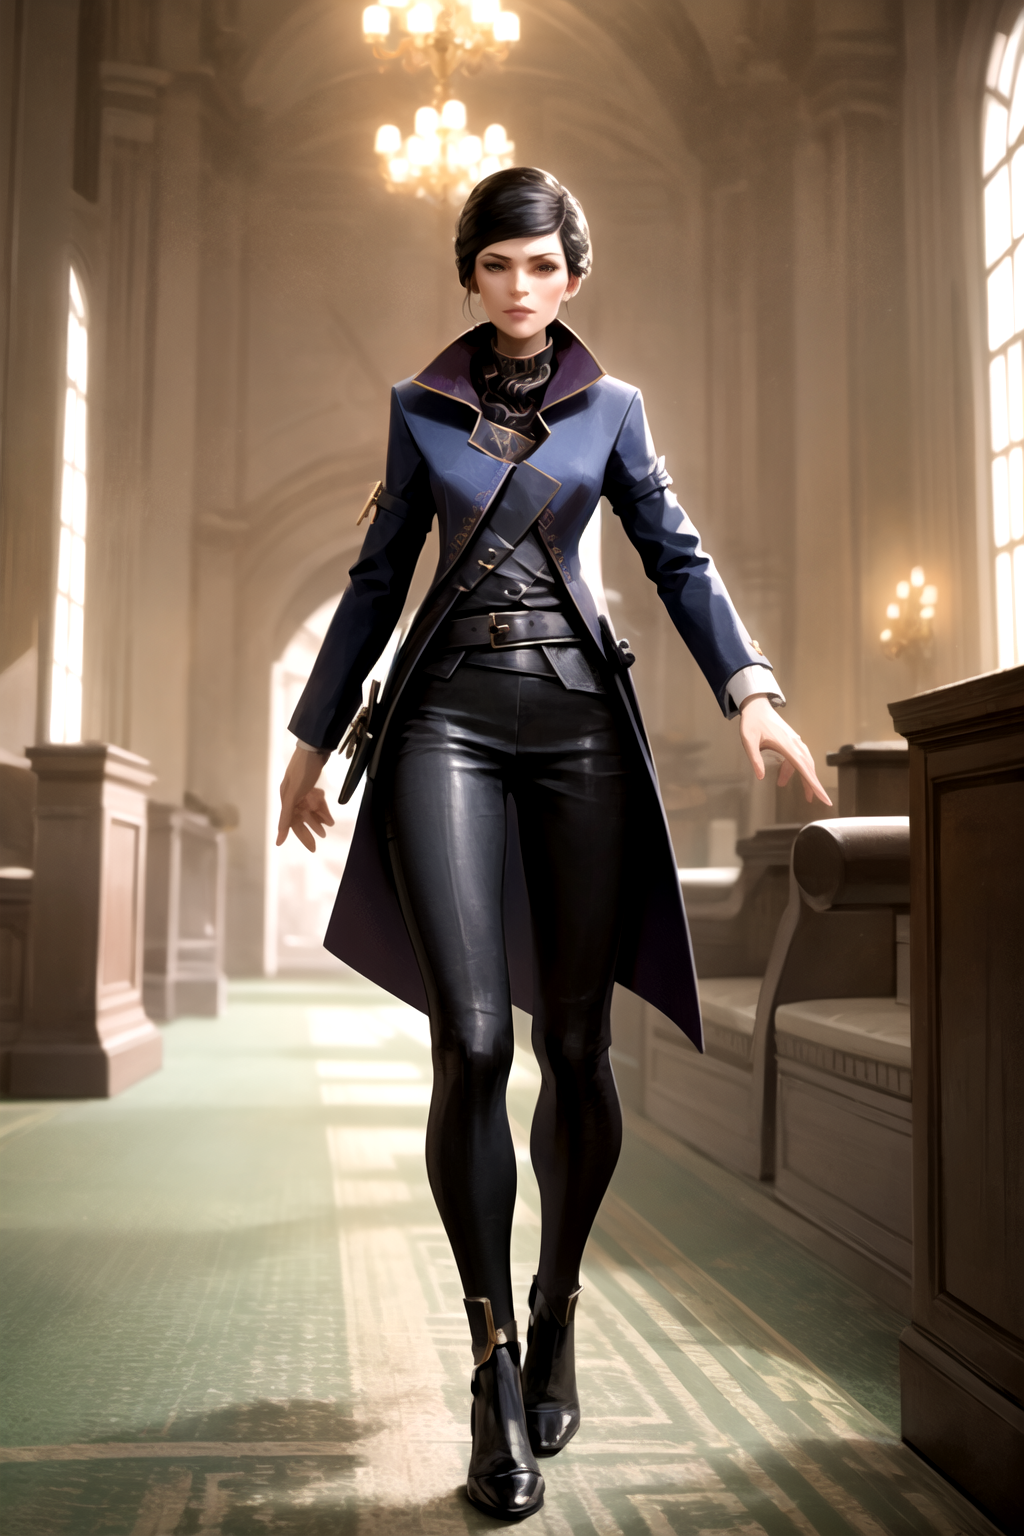 Emily Kaldwin - Dishonored 2 - Character LORA image by Konan